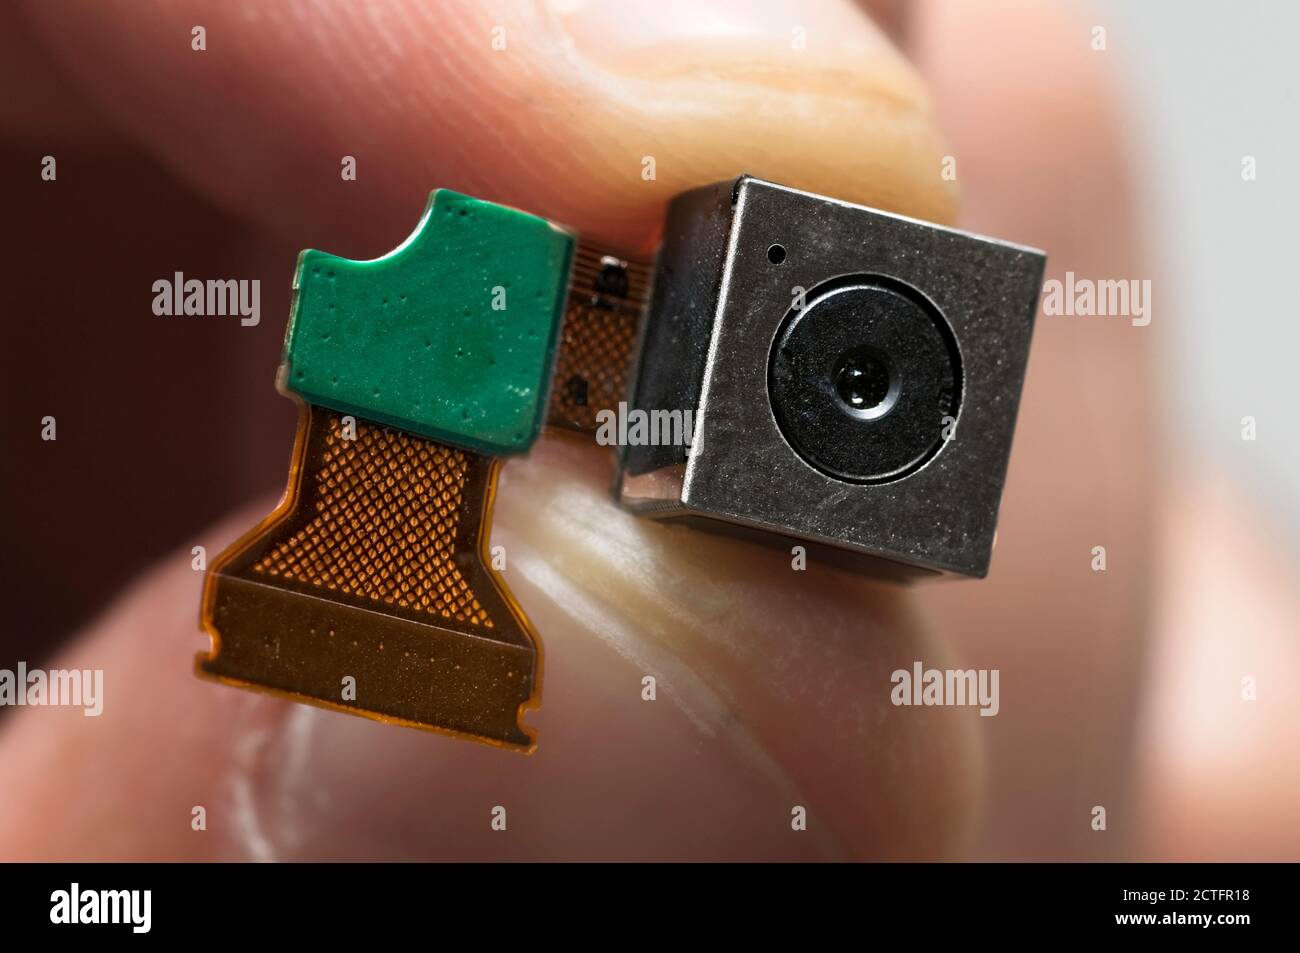 Lens, electronic circuit and sensor box of a micro camera. Stock Photo